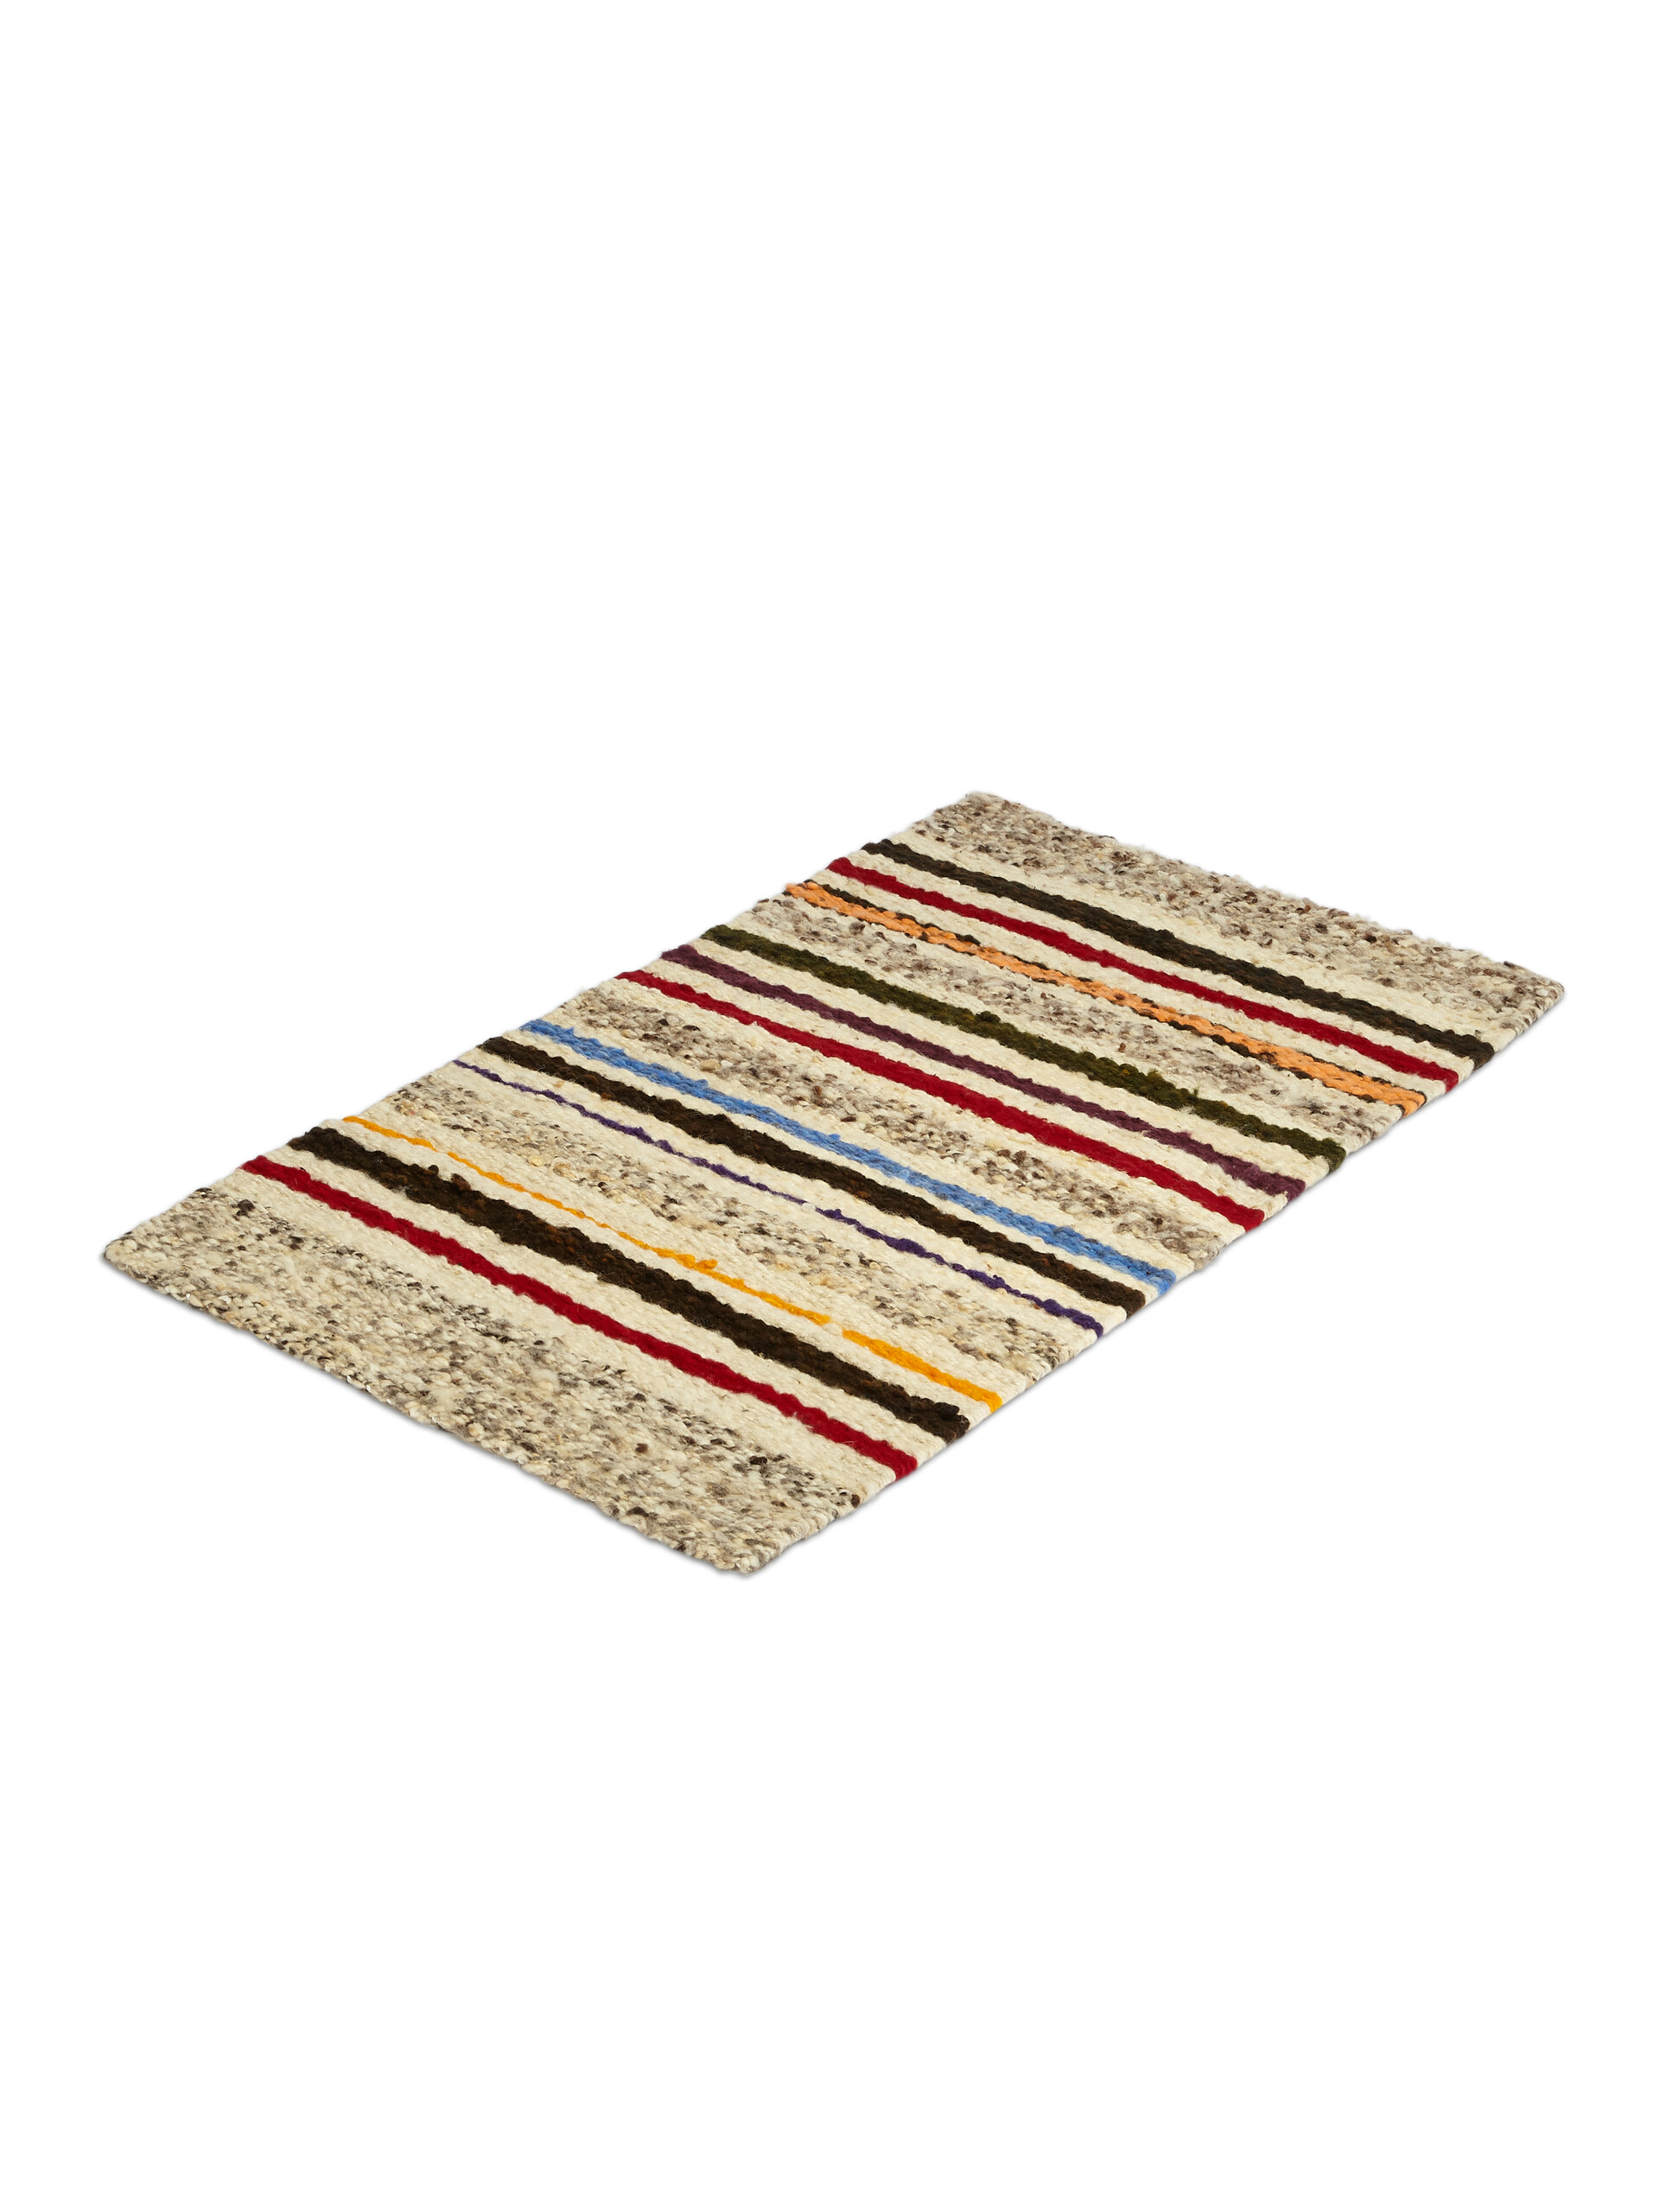 Small MARNI MARKET wool carpet - Furniture - Image 2